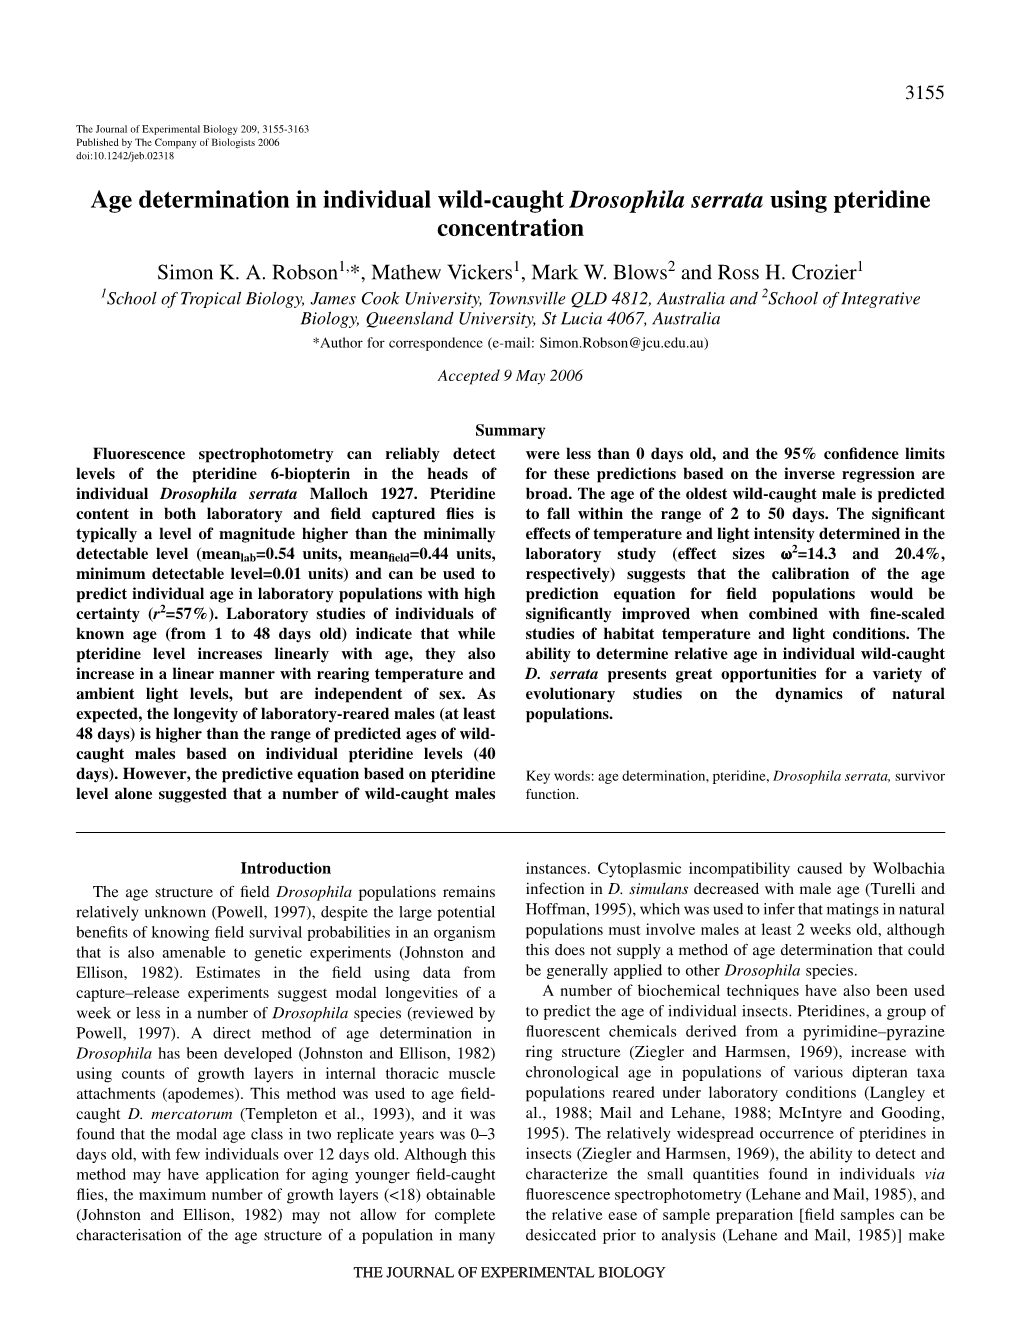 Age Determination in Individual Wild-Caught Drosophila Serrata Using Pteridine Concentration Simon K